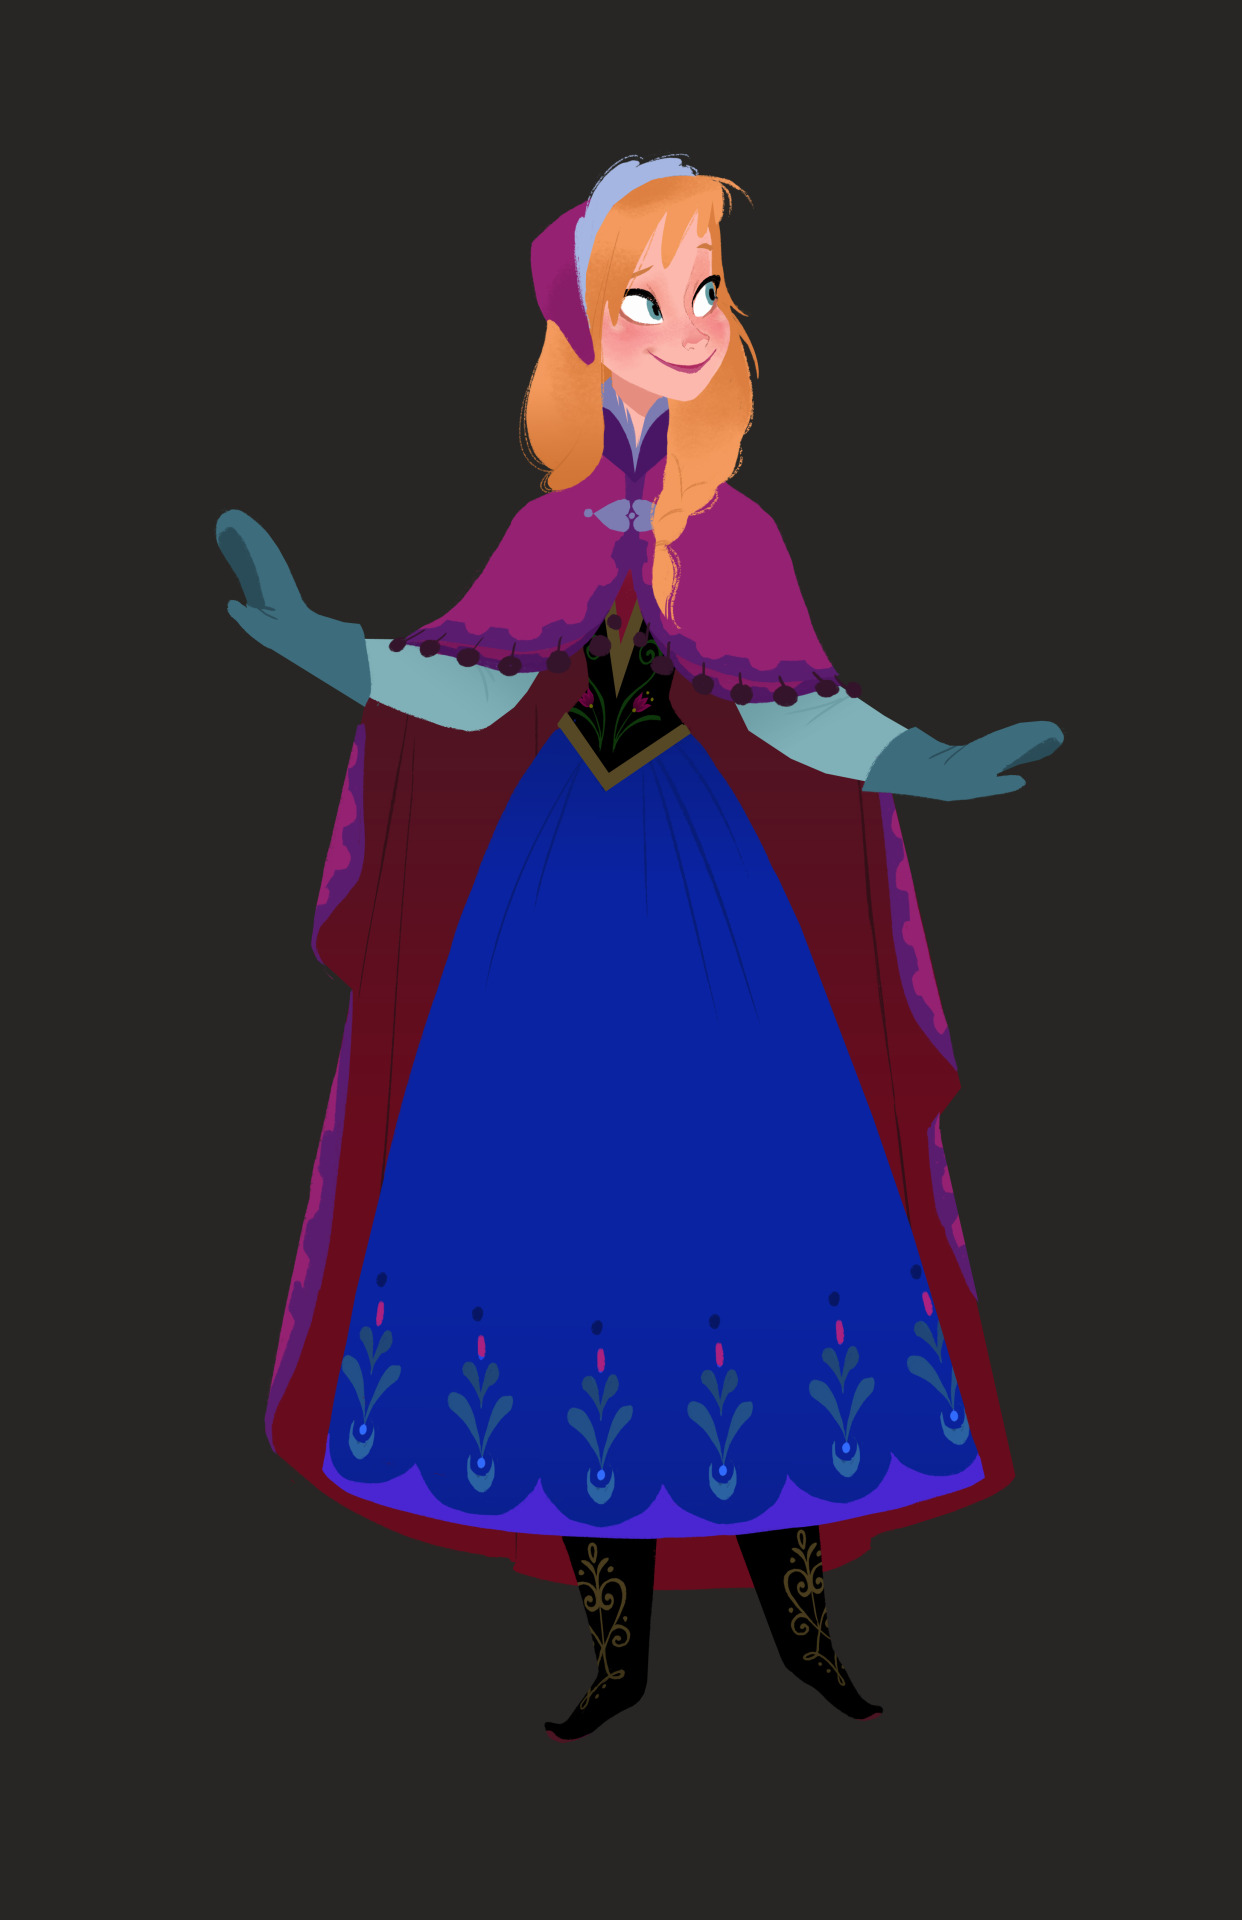 Walt Disney Animation Studios — Frozen character visual development art.